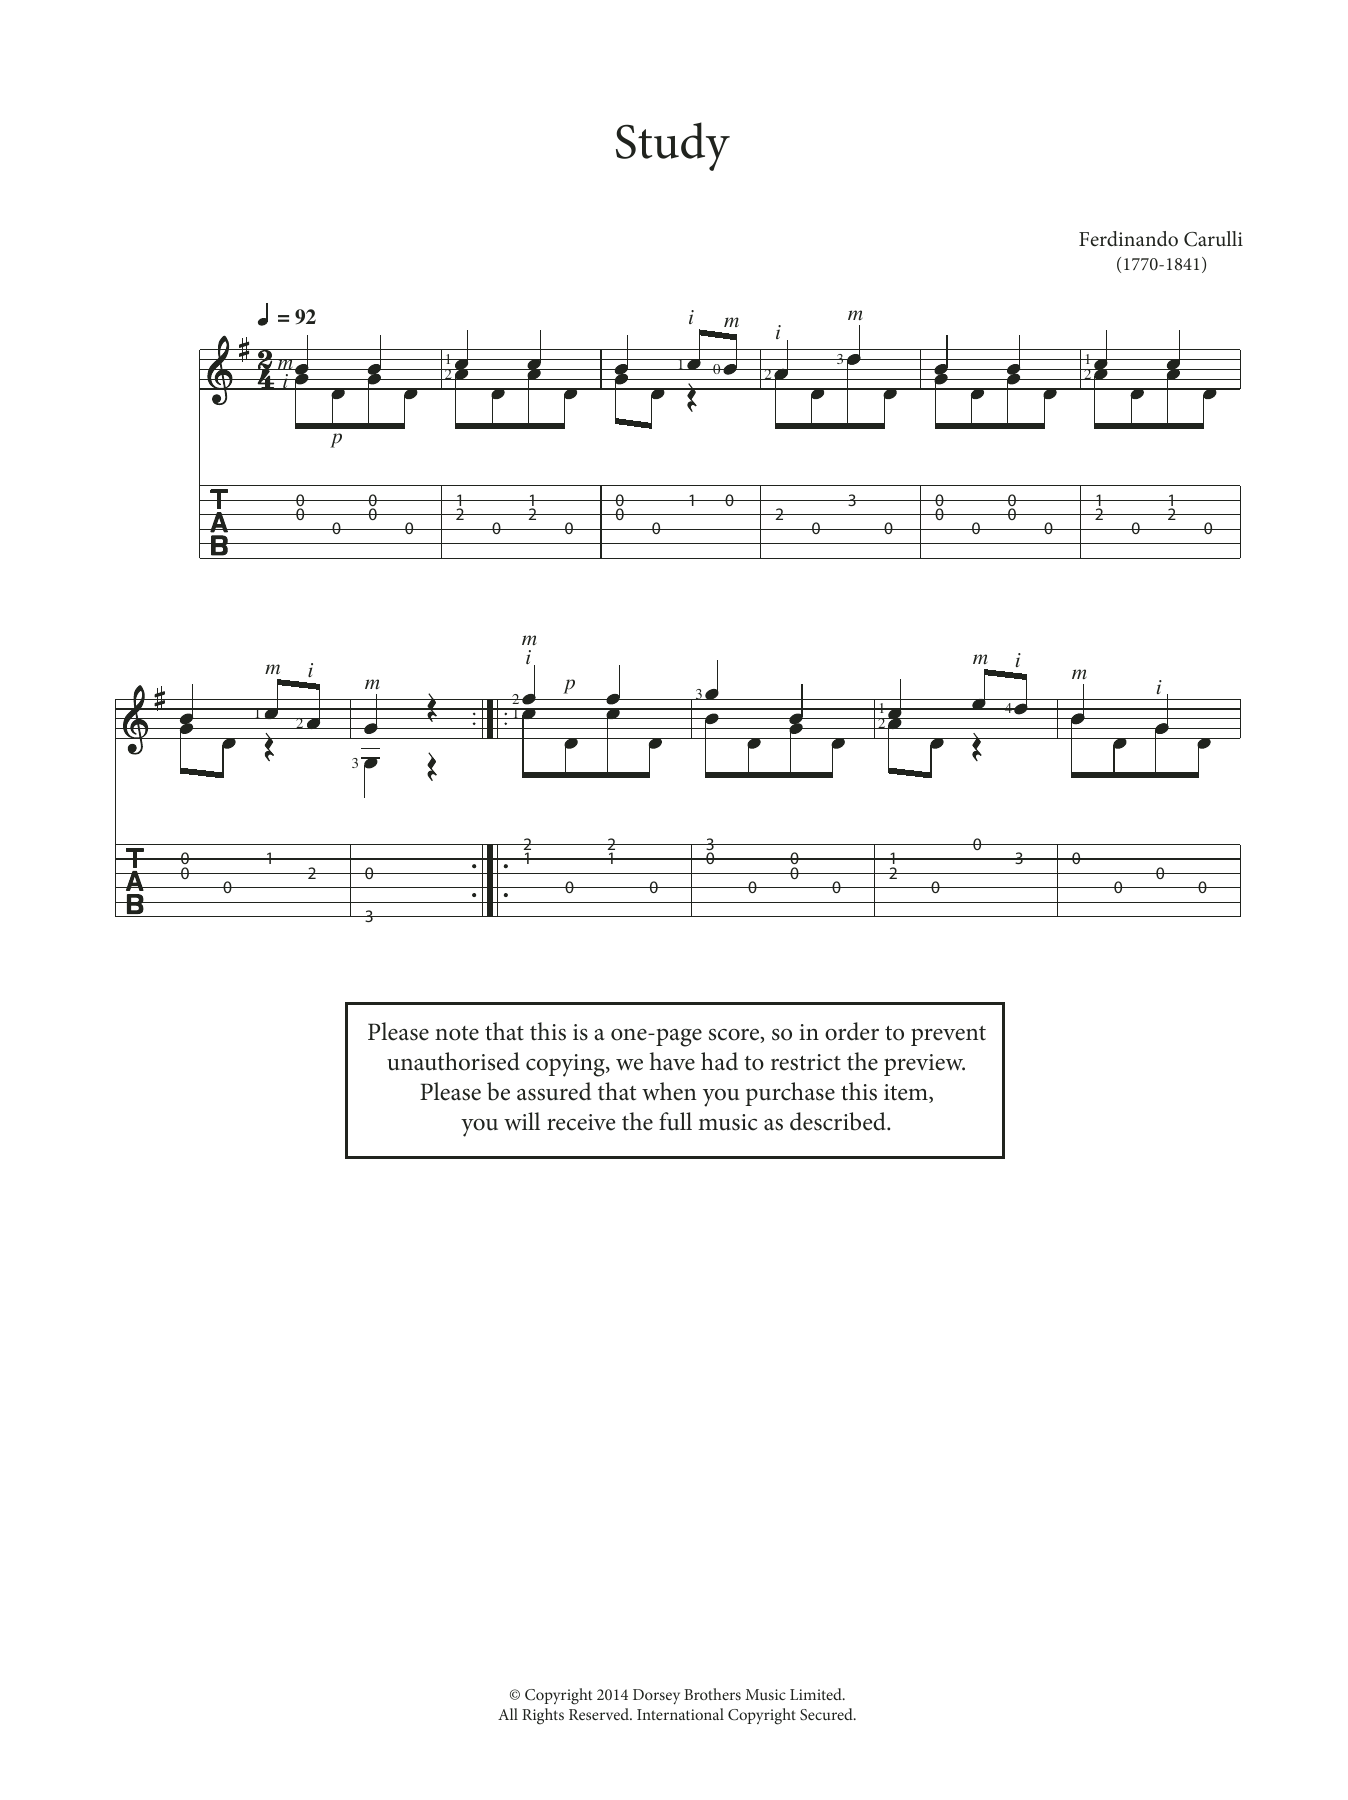 Download Ferdinando Carulli Study Sheet Music